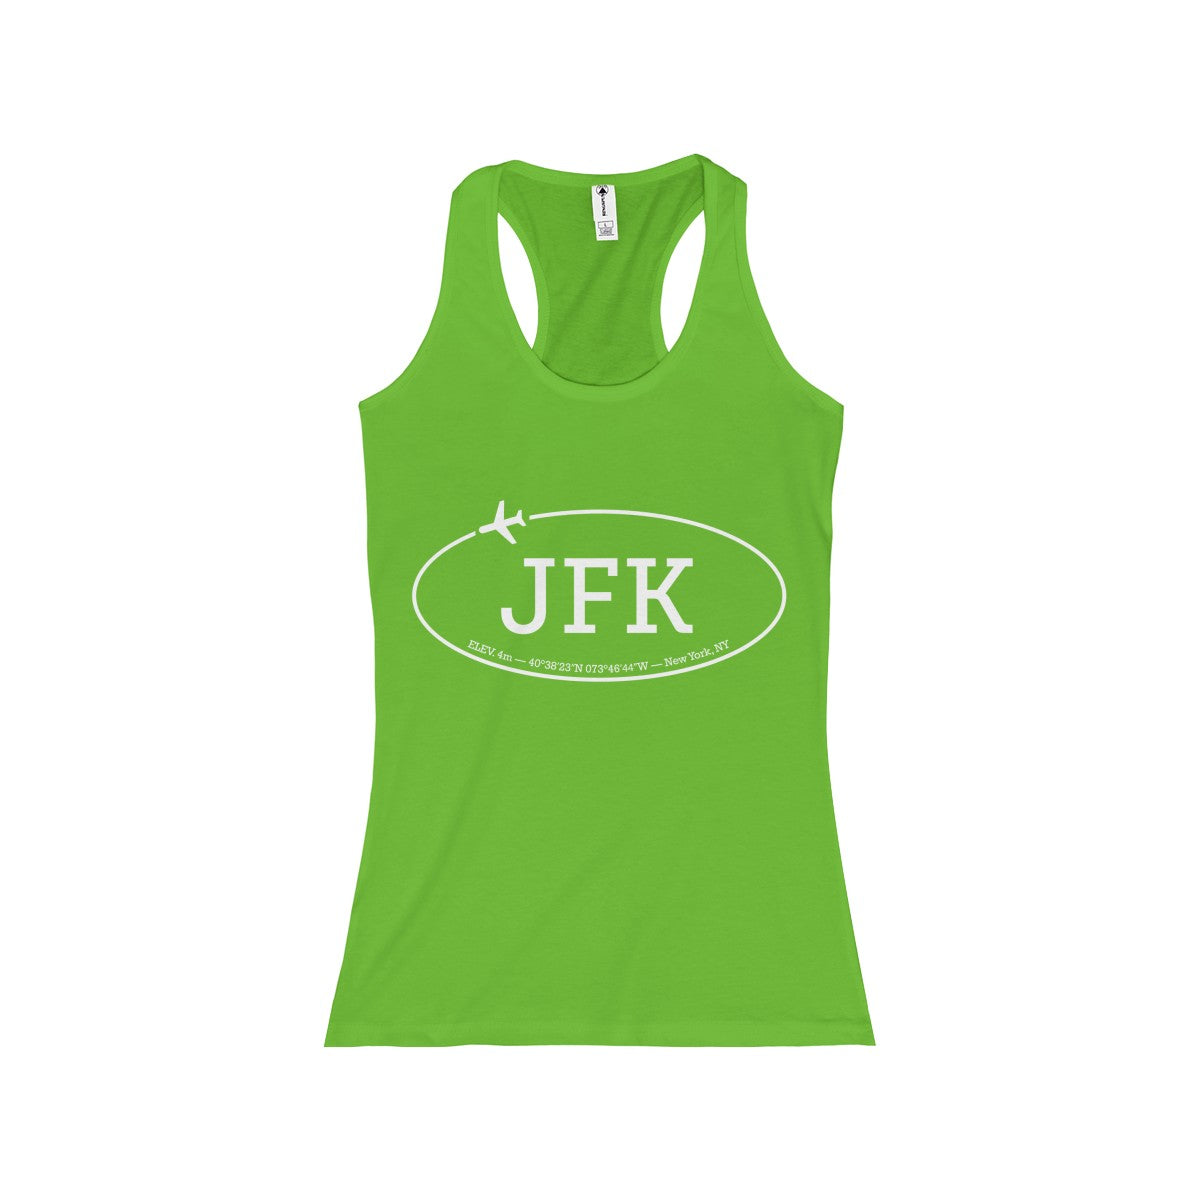 JFK Local - Women's Racerback Tank